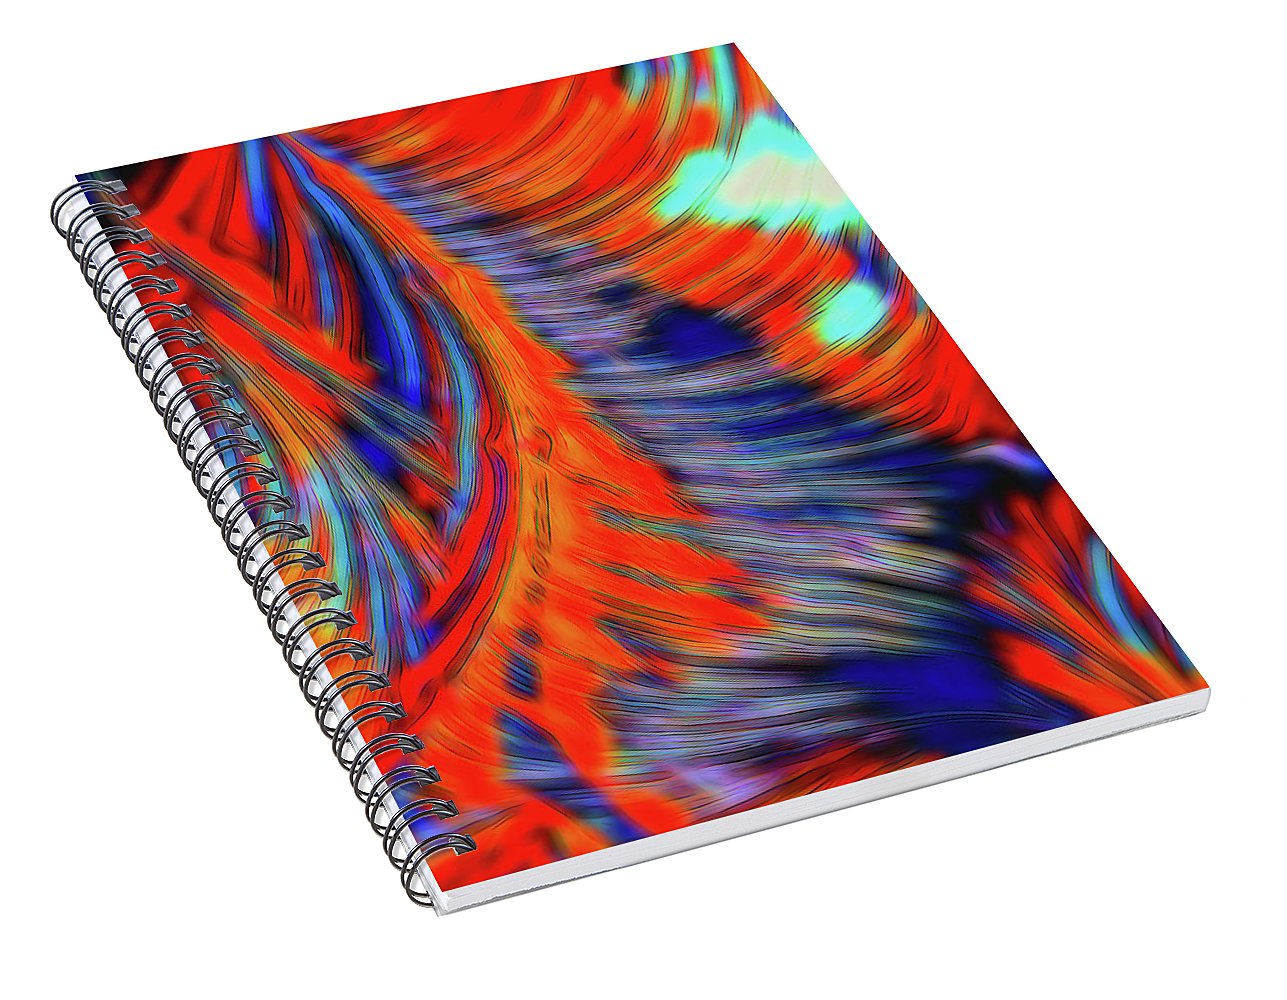 Red Orange Tie Dye Fractal Abstract - Spiral Notebook